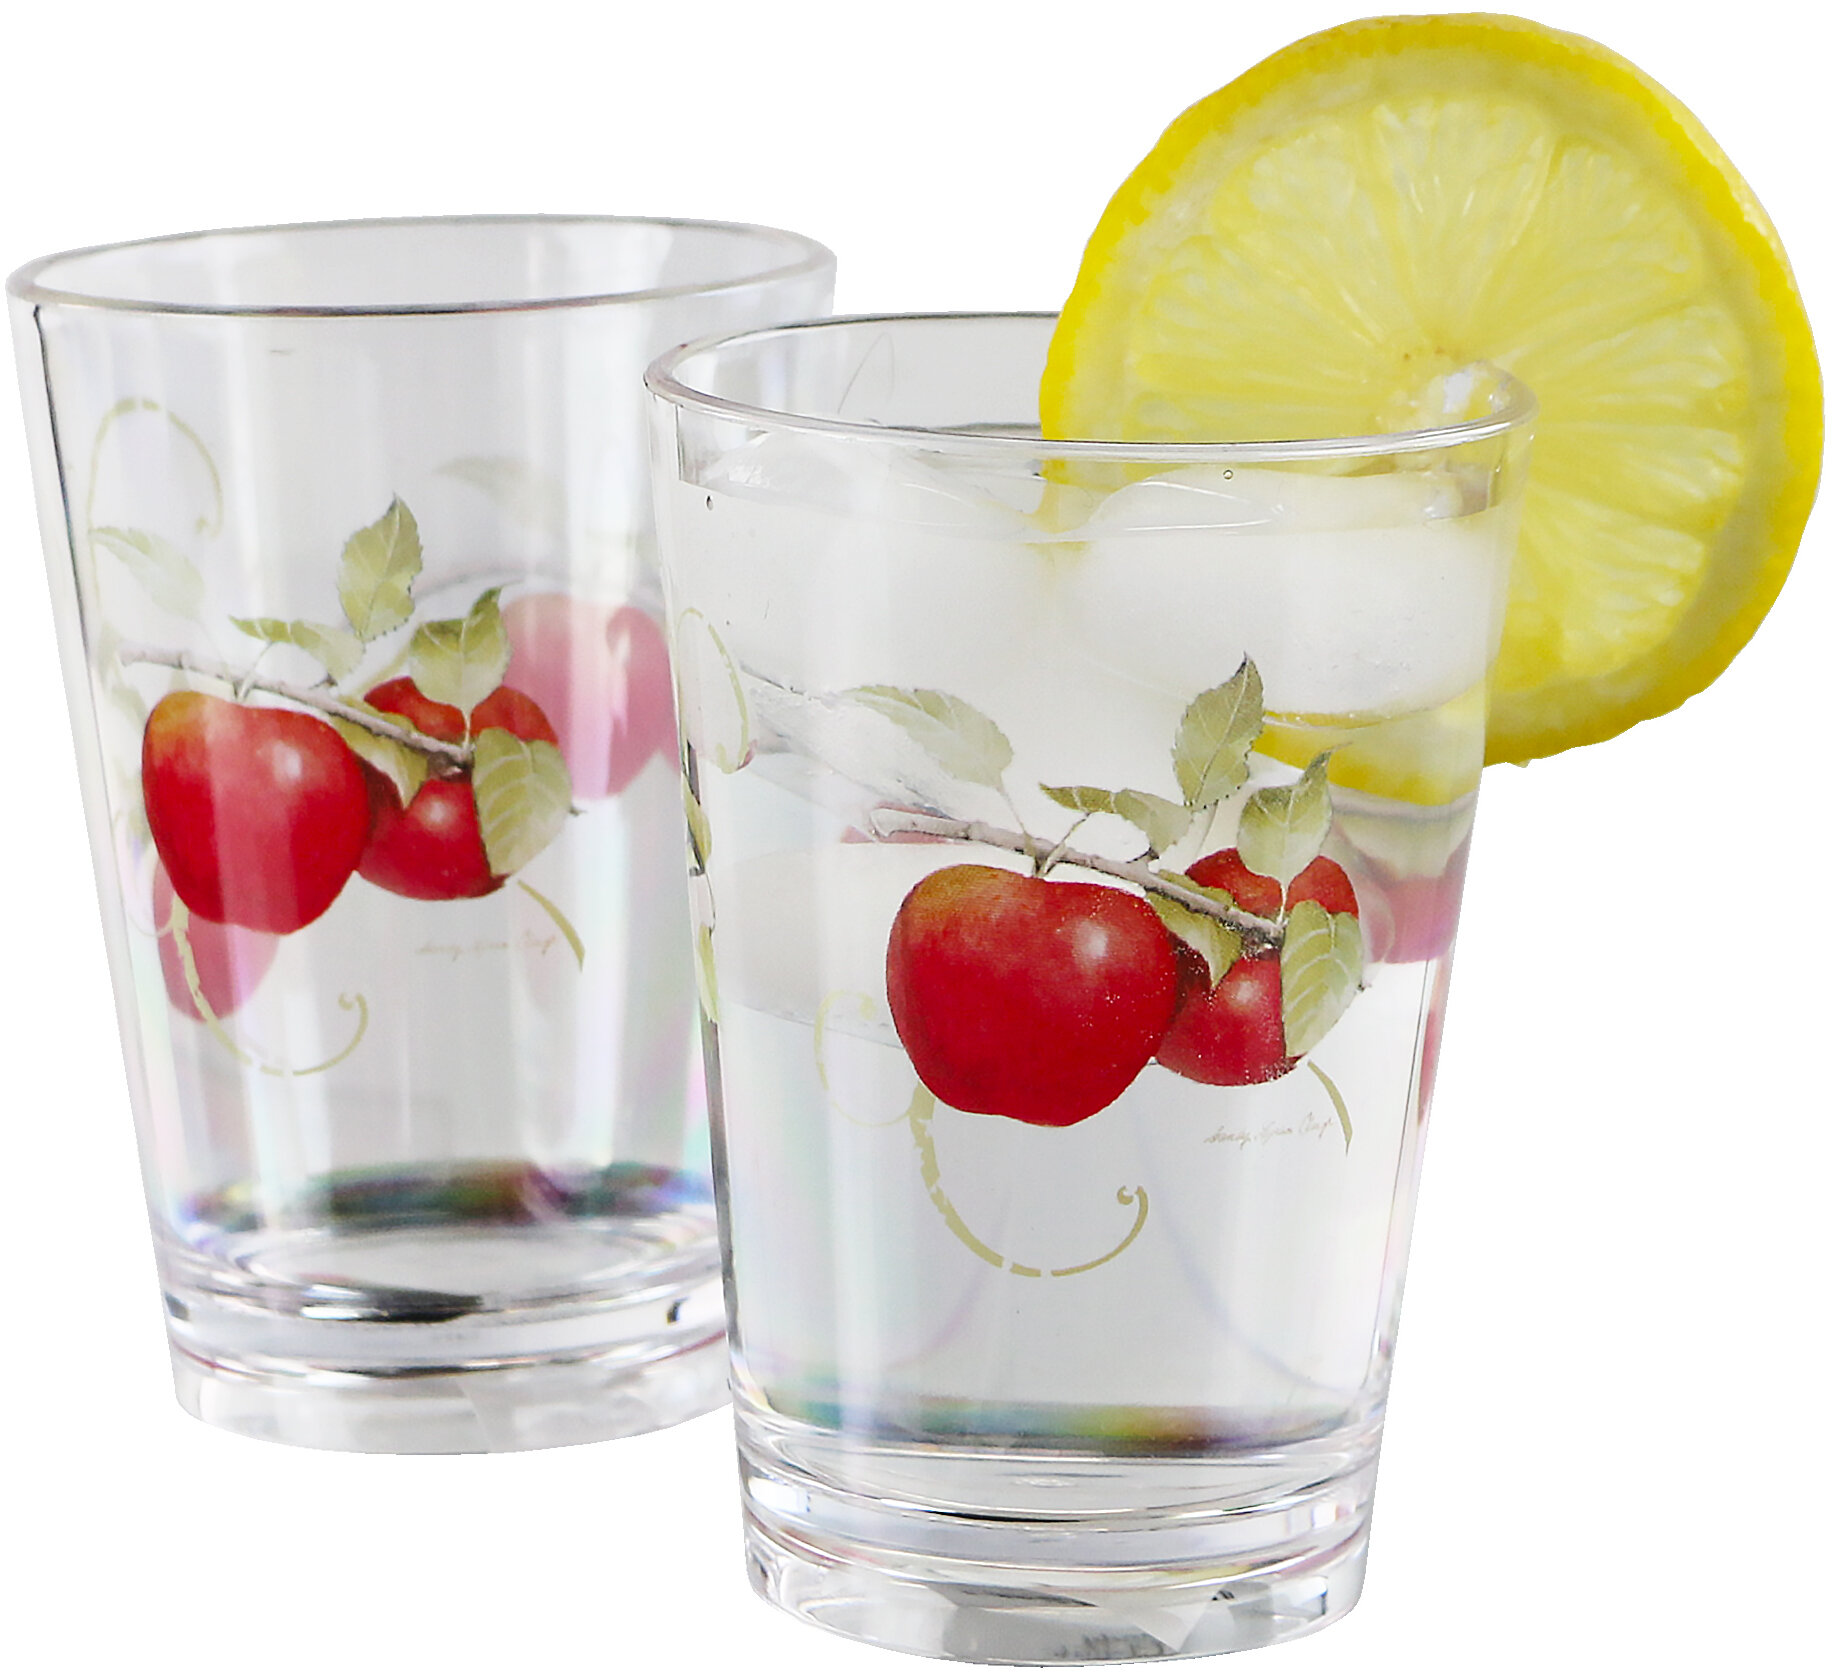 Acrylic Drinking Glasses by Decor Works Dishwasher Safe Tumbler Glassware Set of 6 Drinking Cups - 12 oz